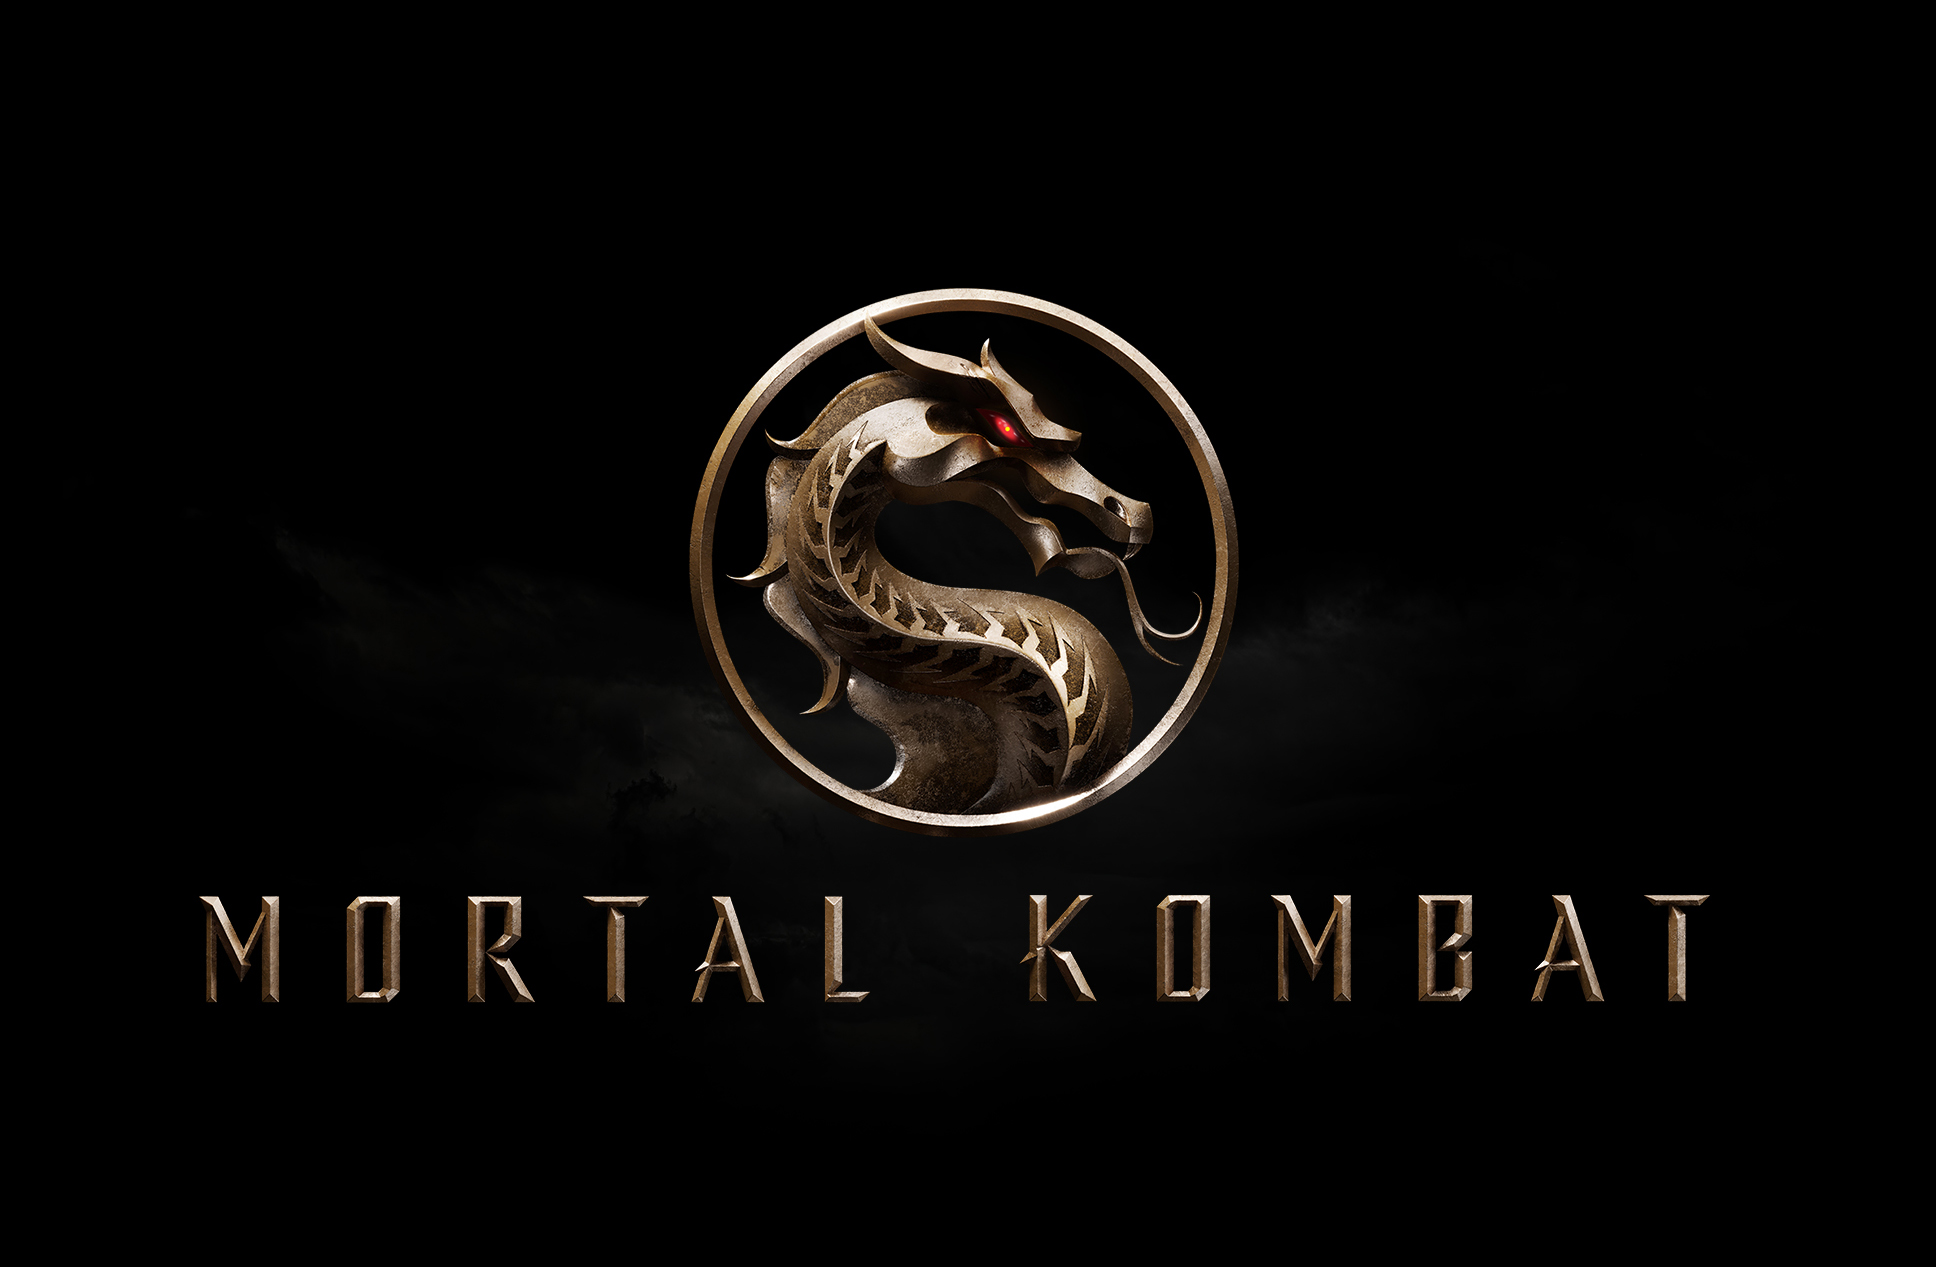 Mortal Kombat image film